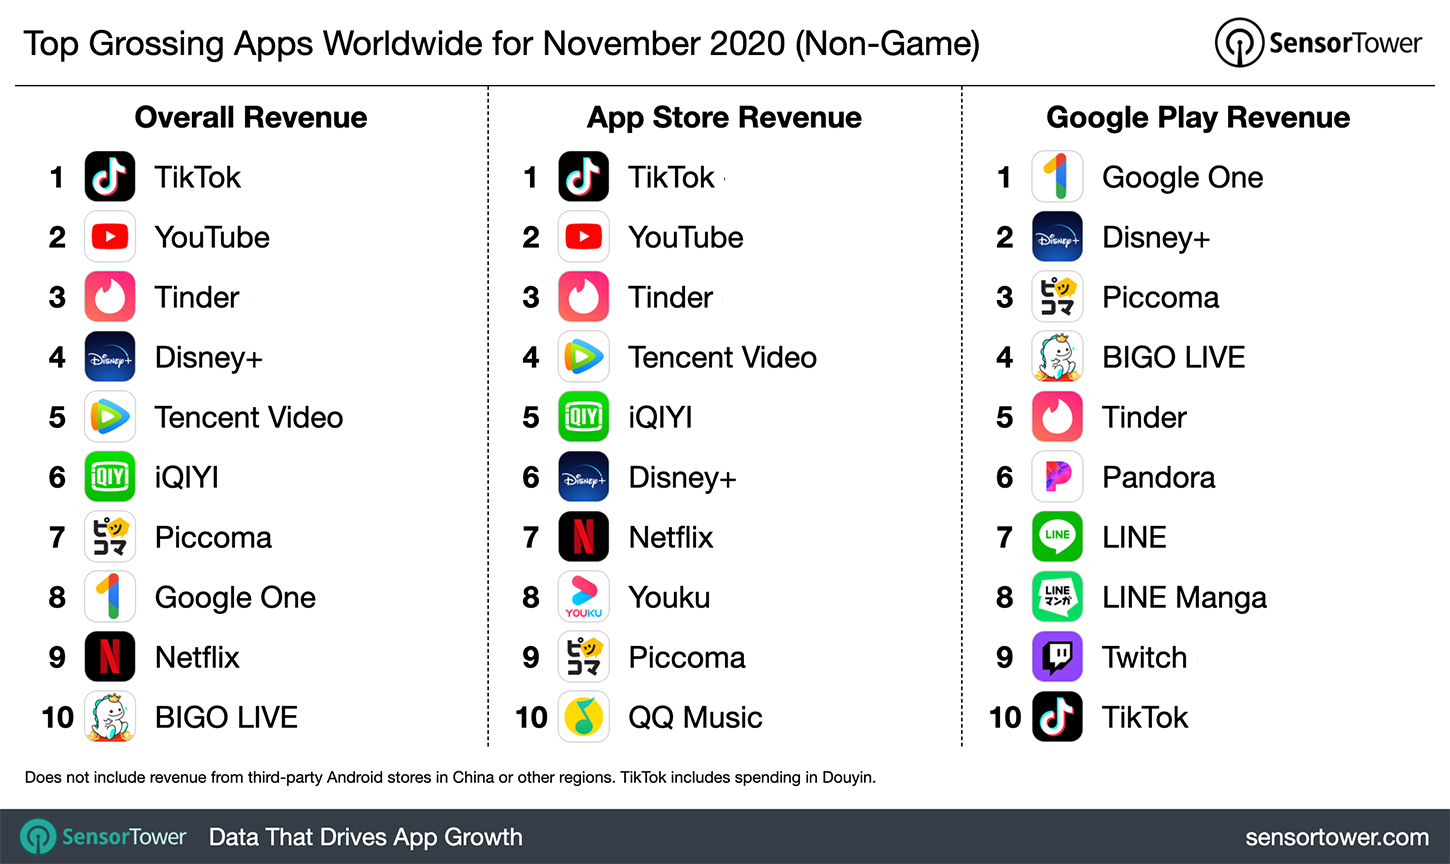 “Top Grossing Apps Worldwide for November 2020